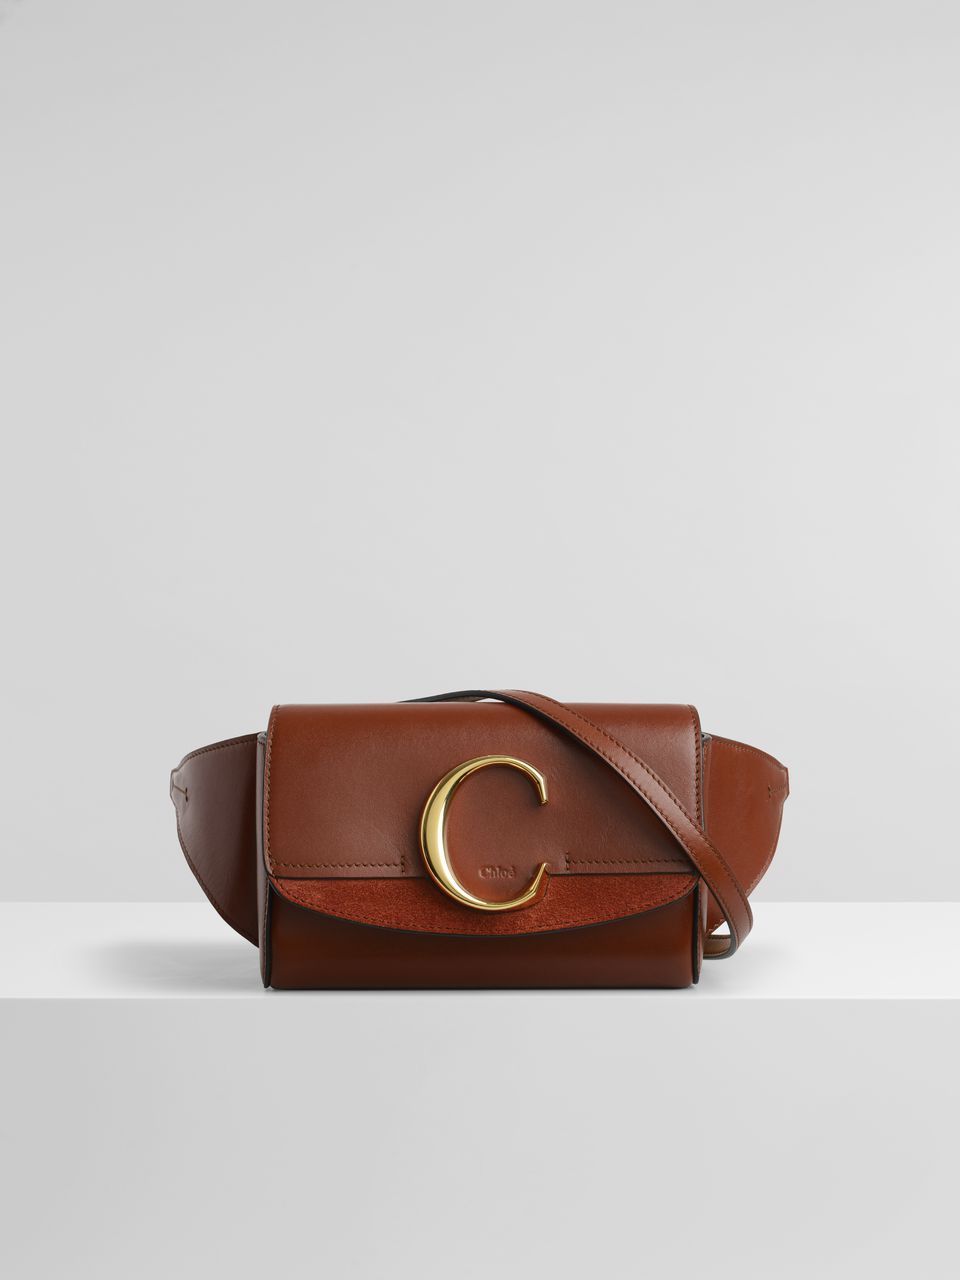 Chloé 'Chloé C' shoulder bag, StclaircomoShops